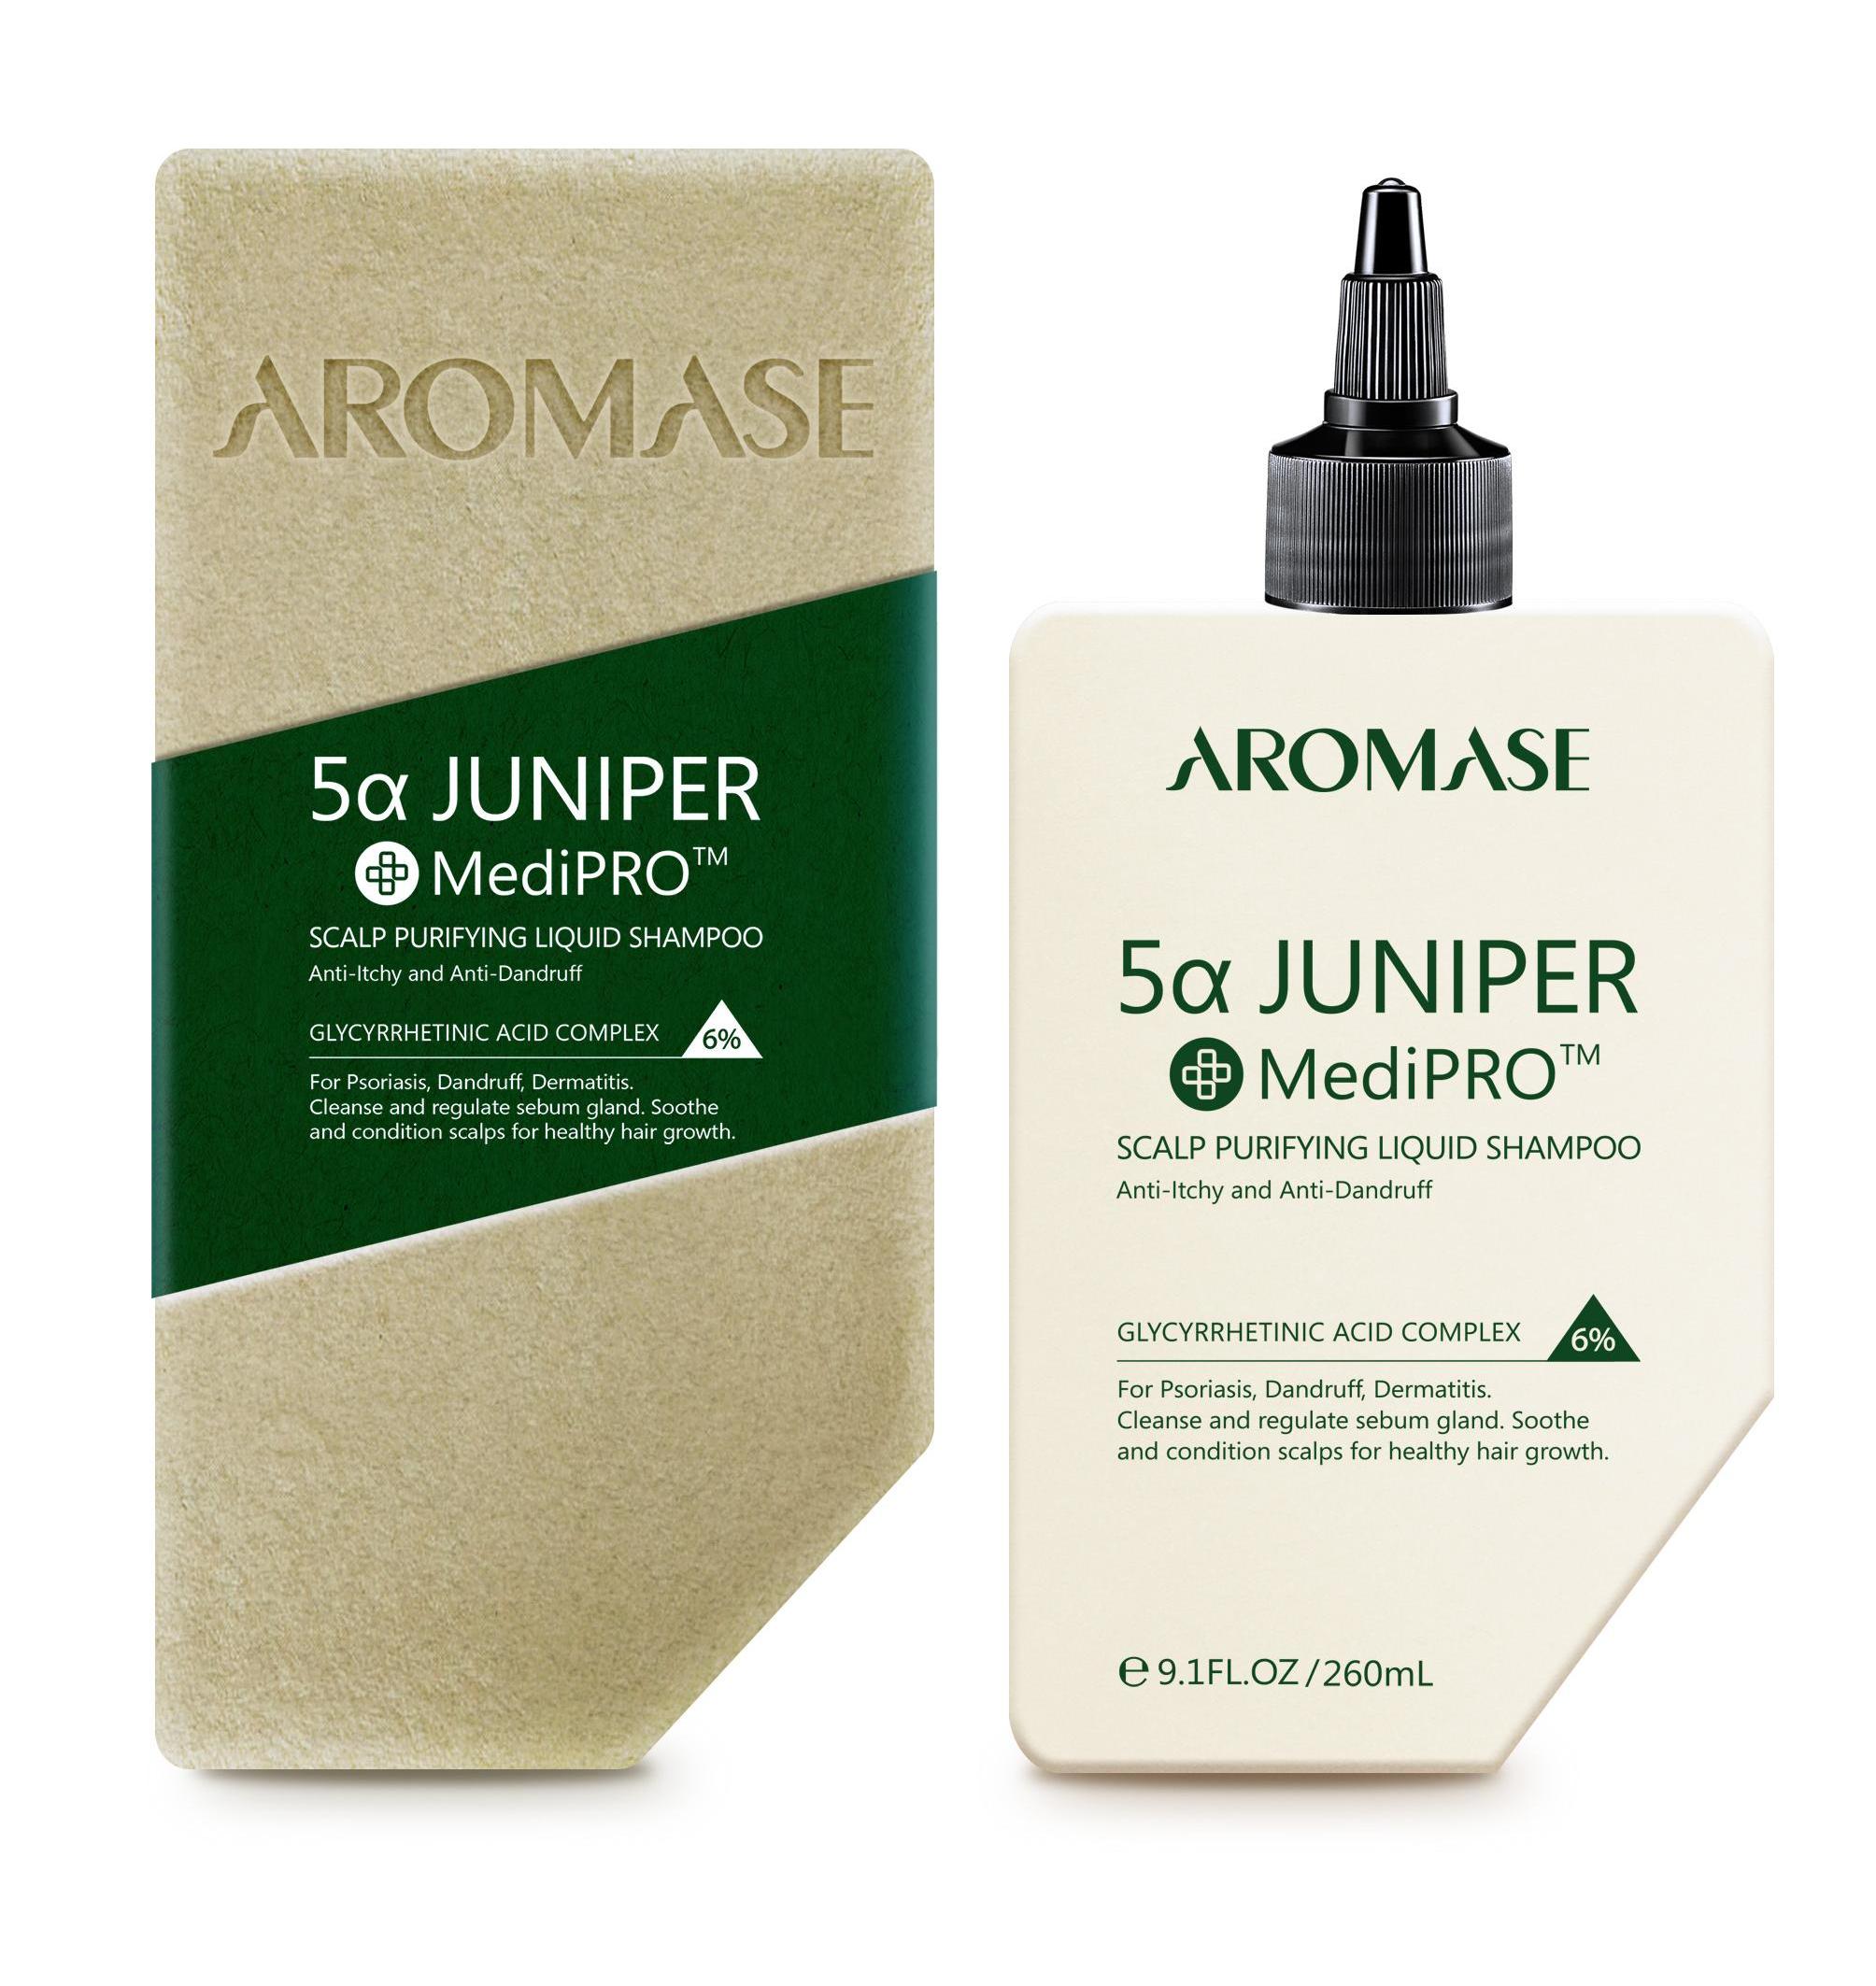  MediPRO™ 5α Juniper Scalp Purifying Liquid Shampoo / MacroHI co., Ltd.